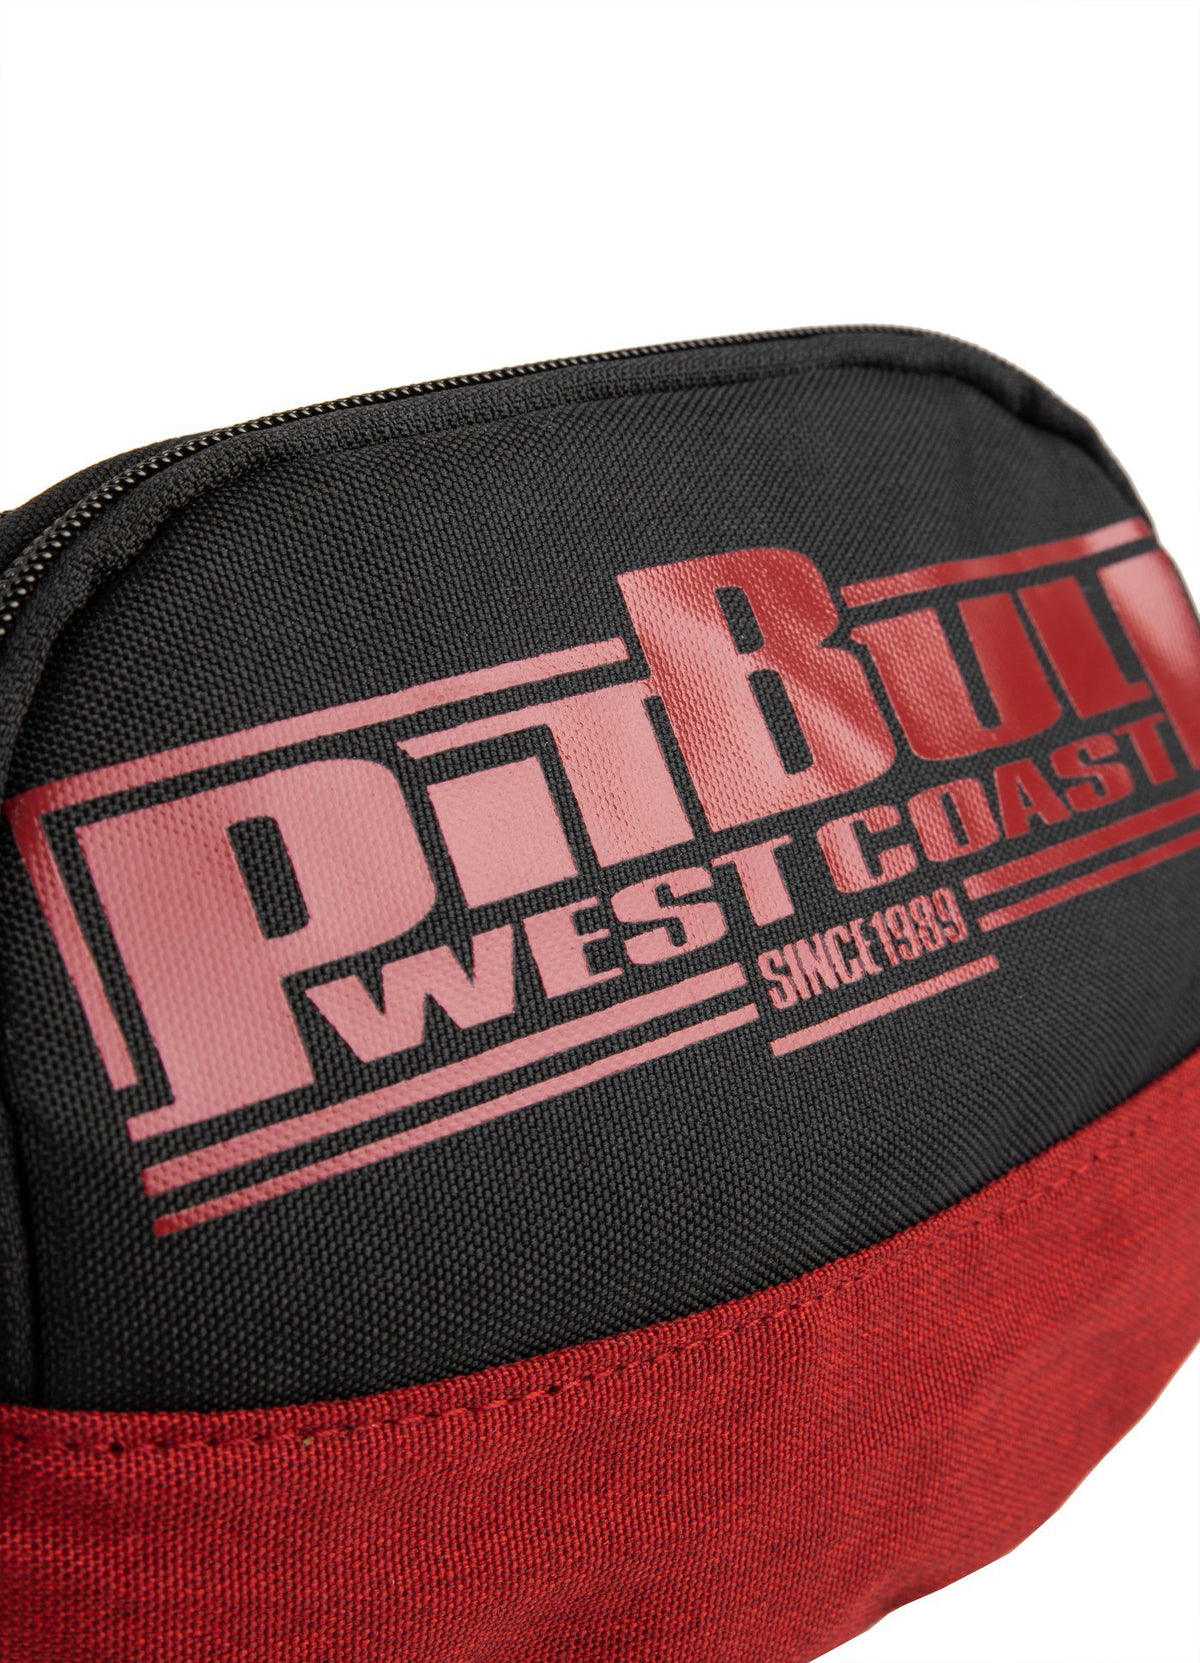 WAISTBAG BOXING BLACK-RED - Pitbull West Coast U.S.A. 